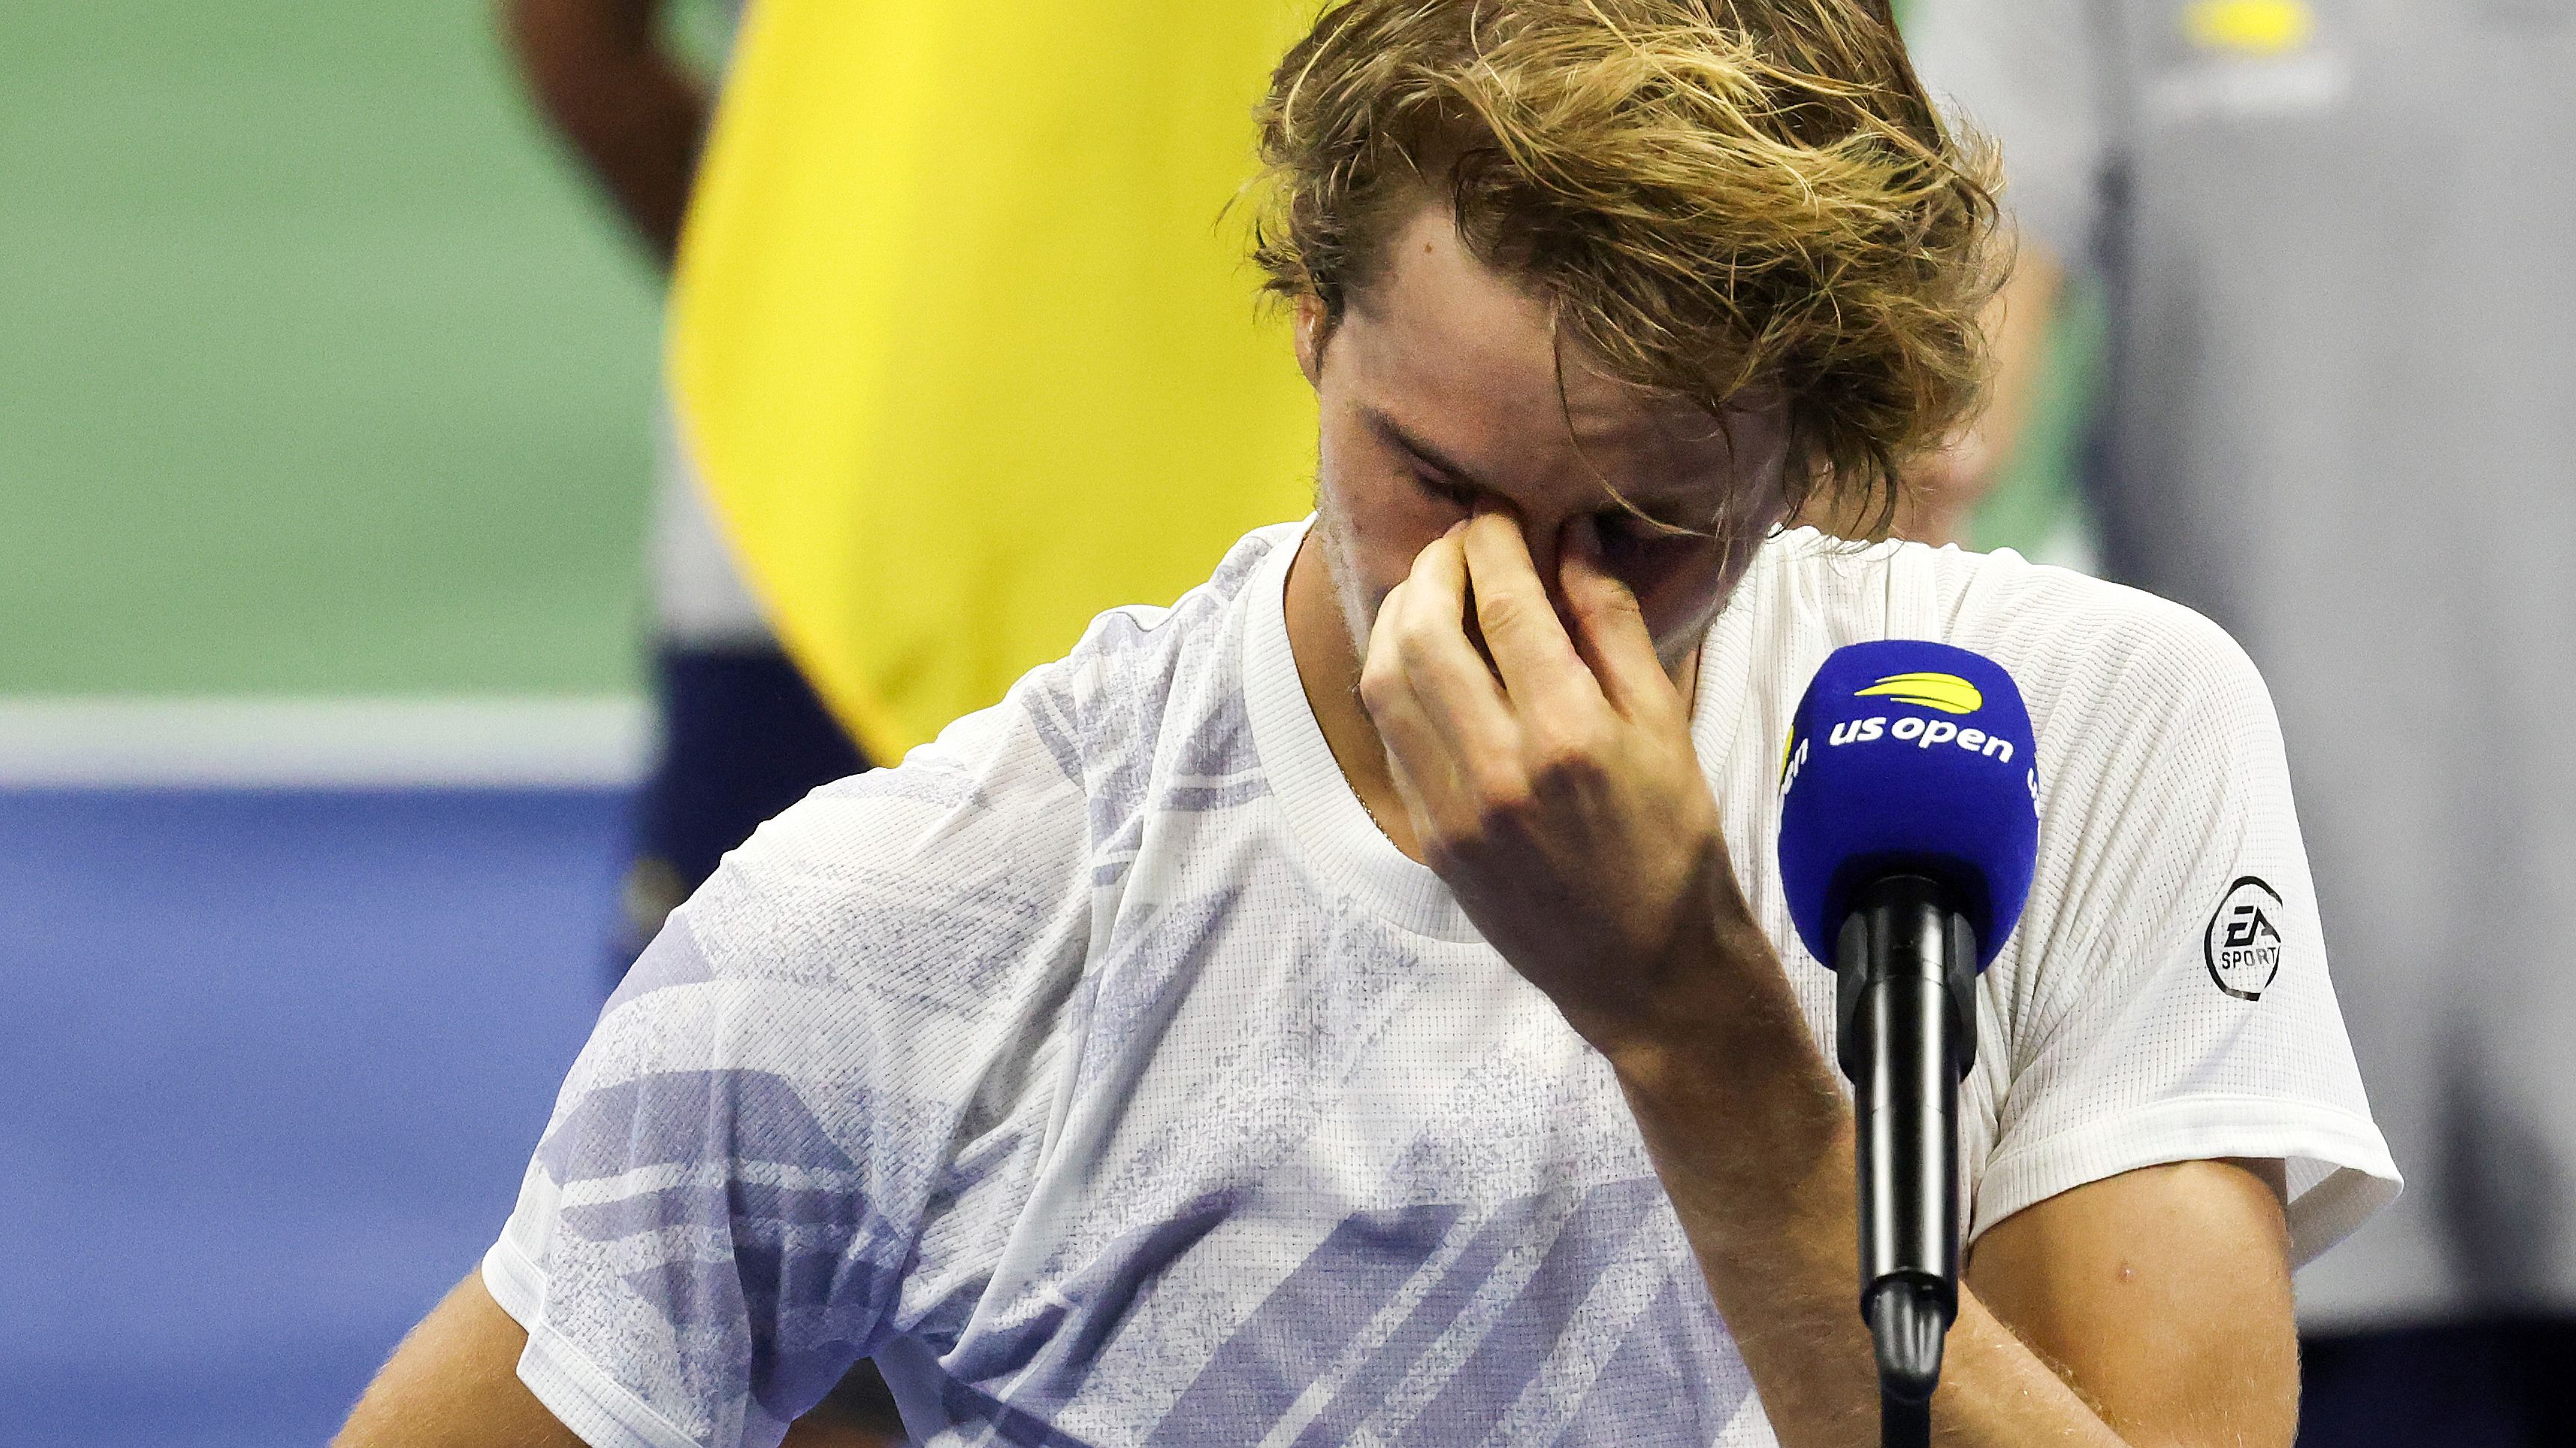 Alexander Zverev fights back tears during his US Open runners-up speech.